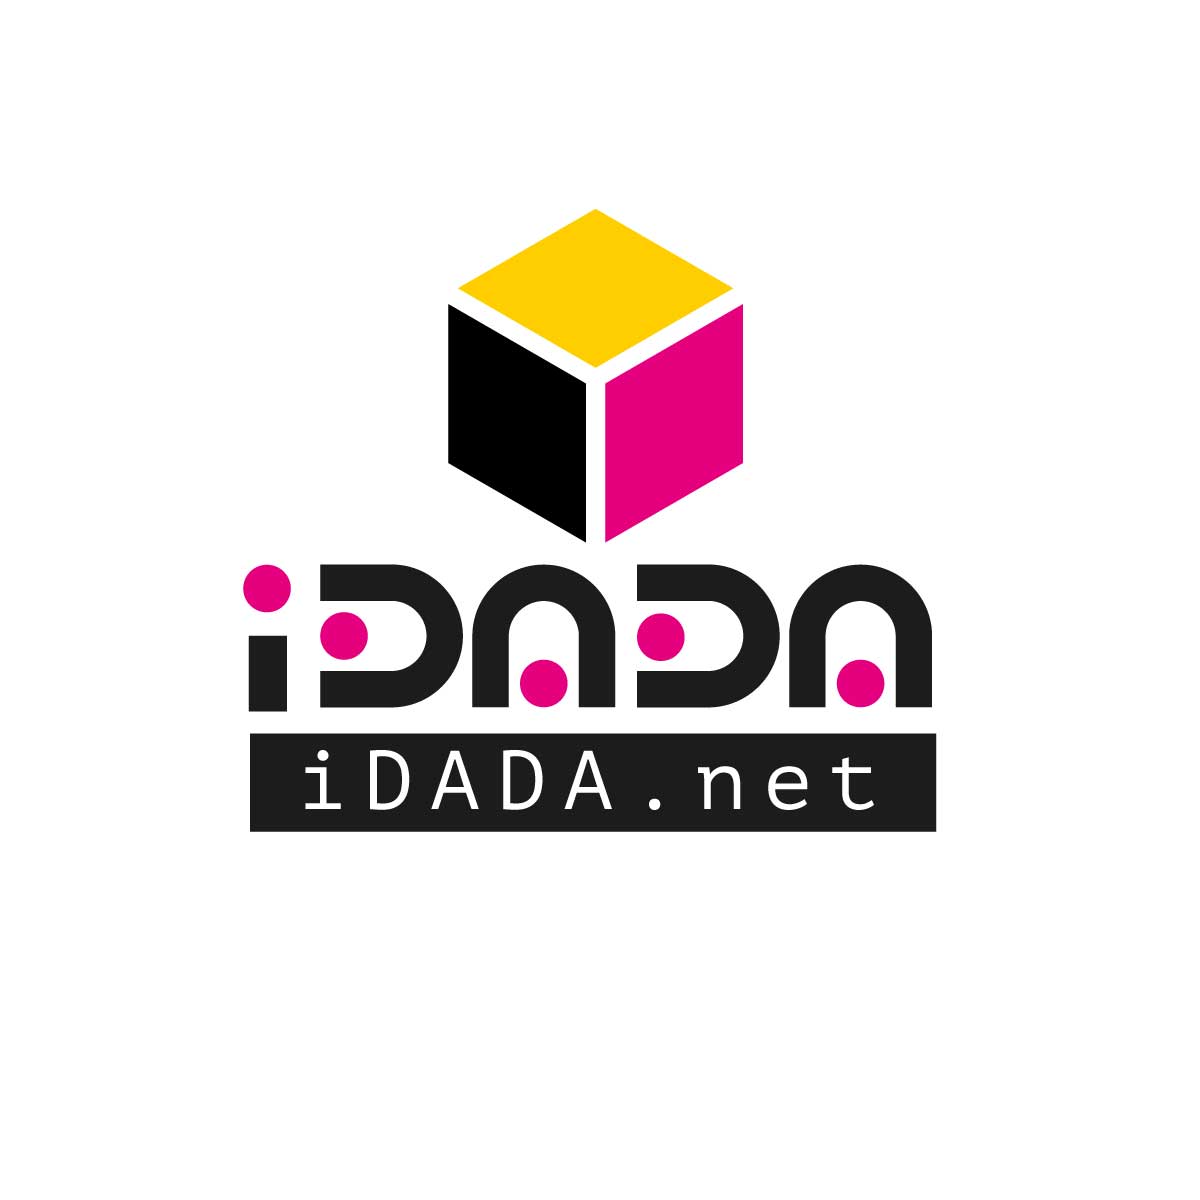 idada.net Branding design by Brandizle